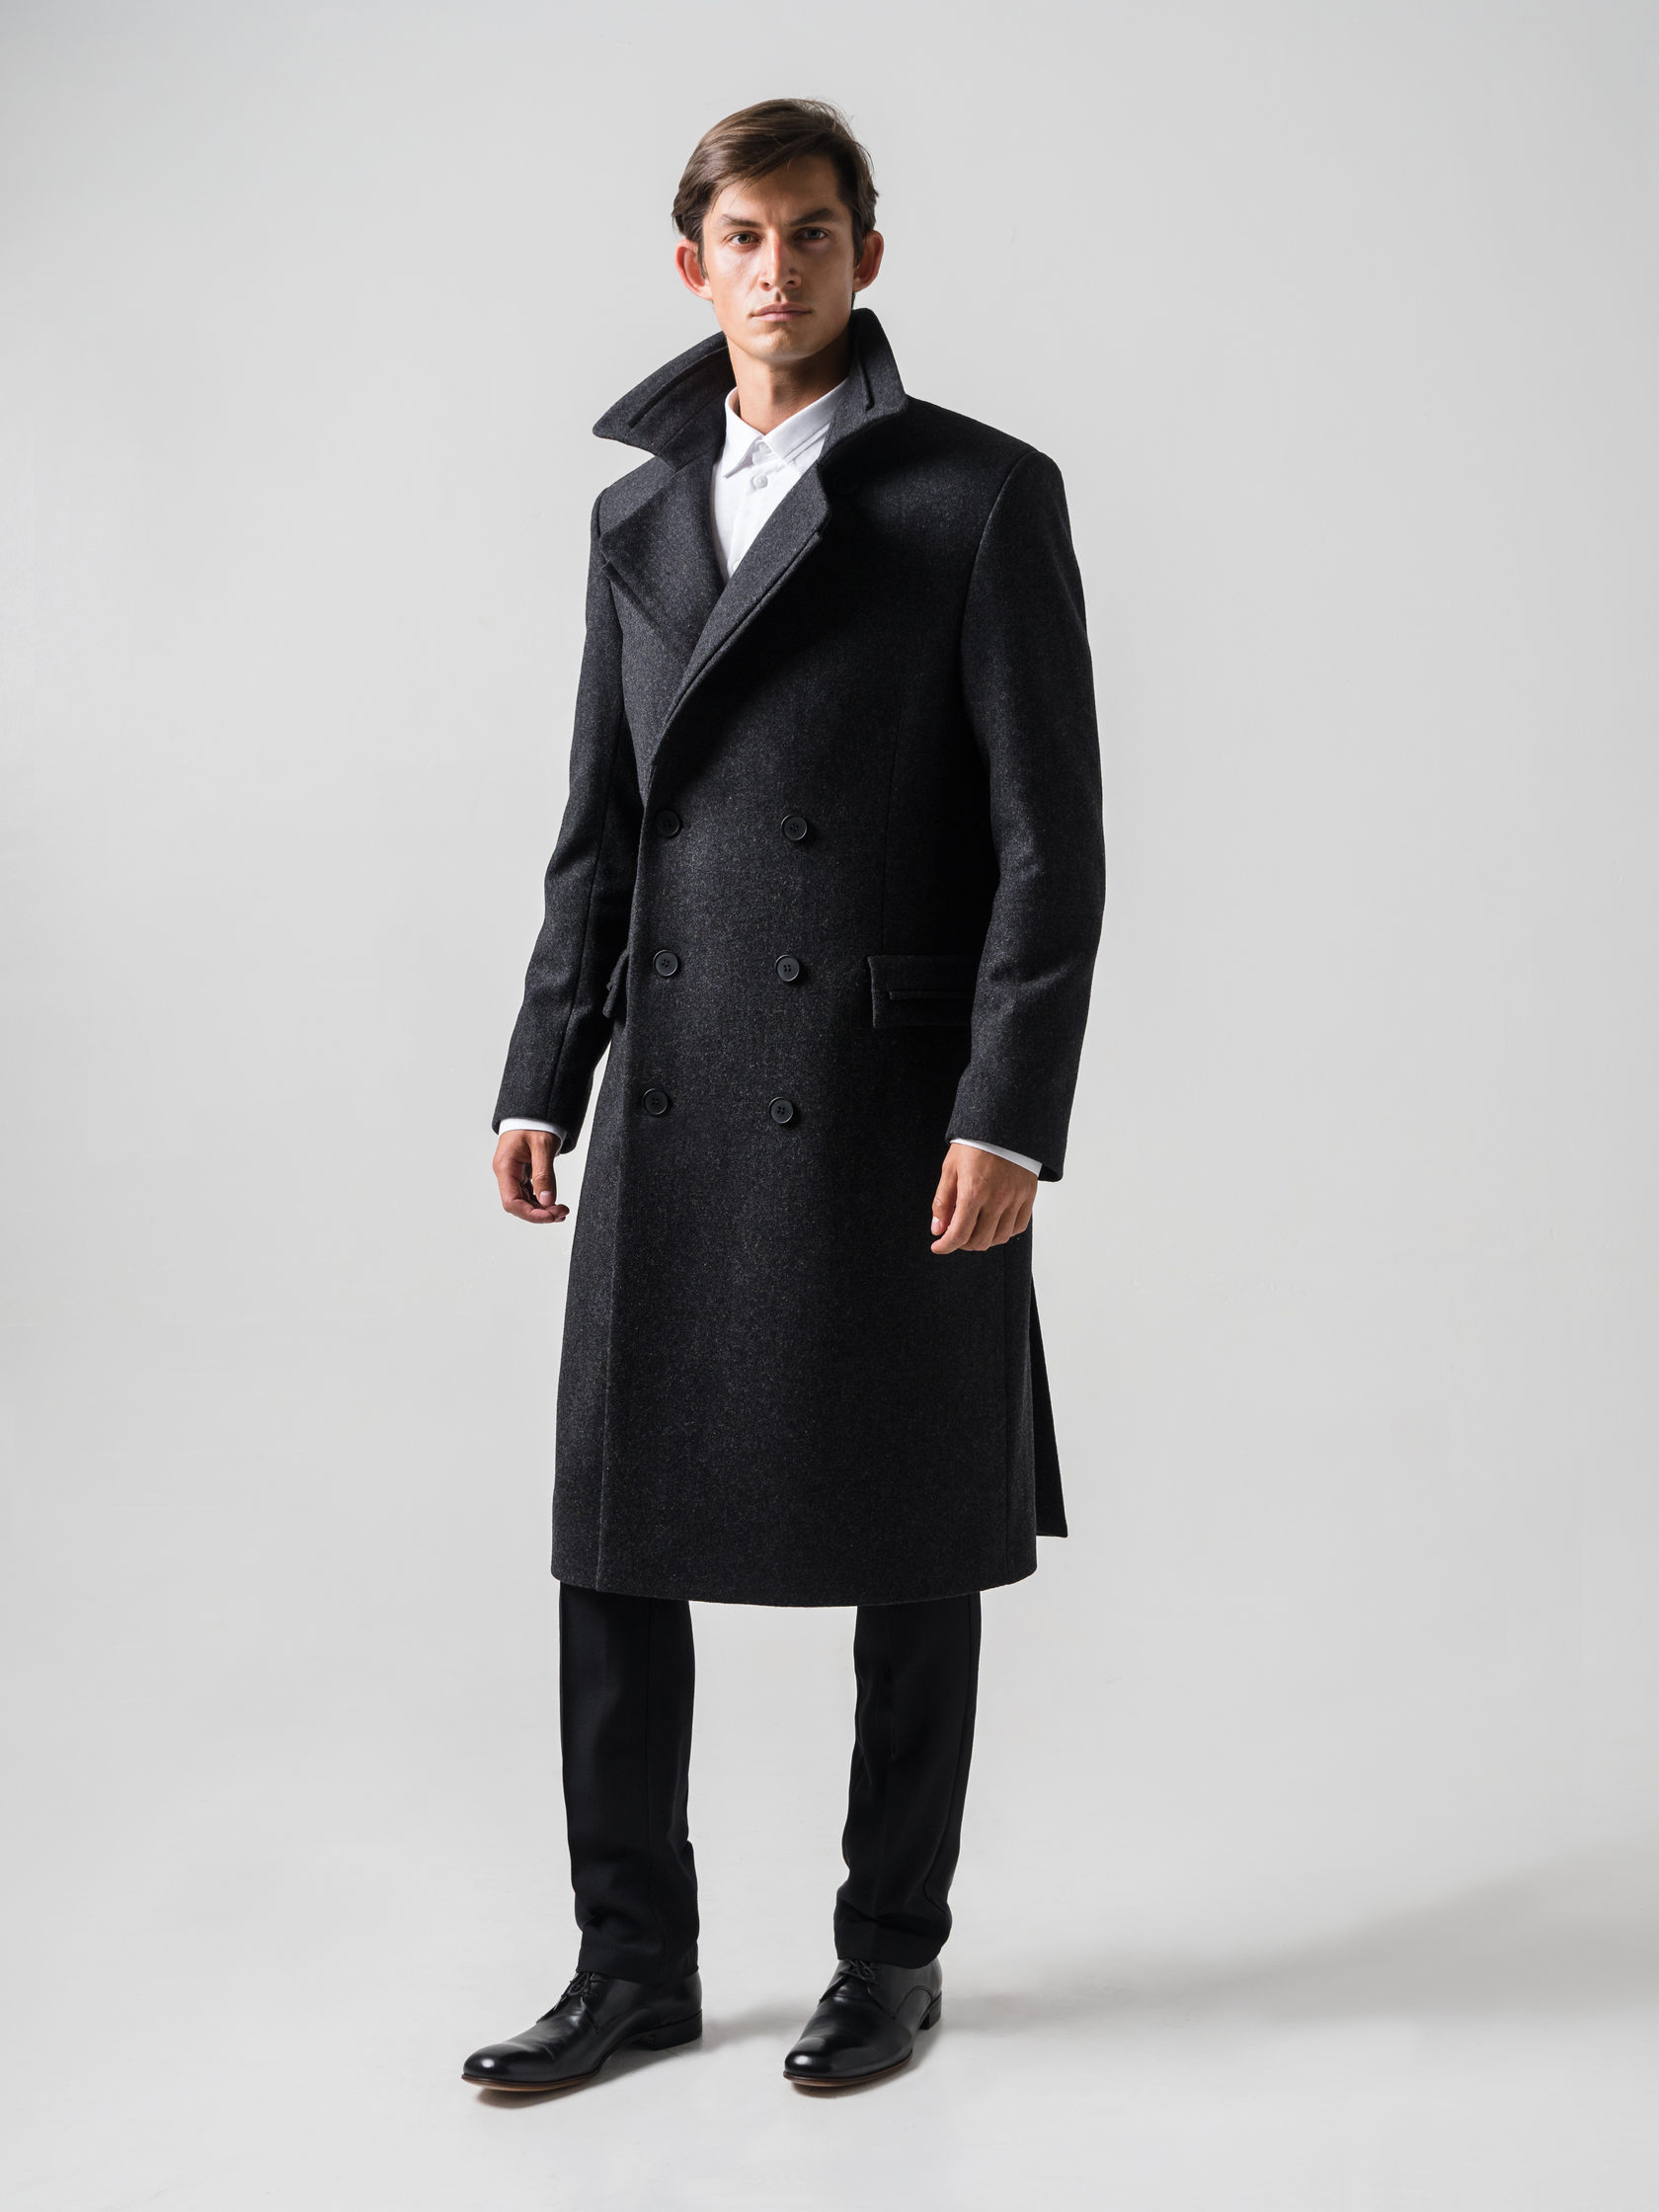 Мужское пальто уфа. Пальто мужское Avalon 10622. Camelot Classic пальто мужское. Defacto мужское длинное пальто. Lozenge пальто мужское model 560.